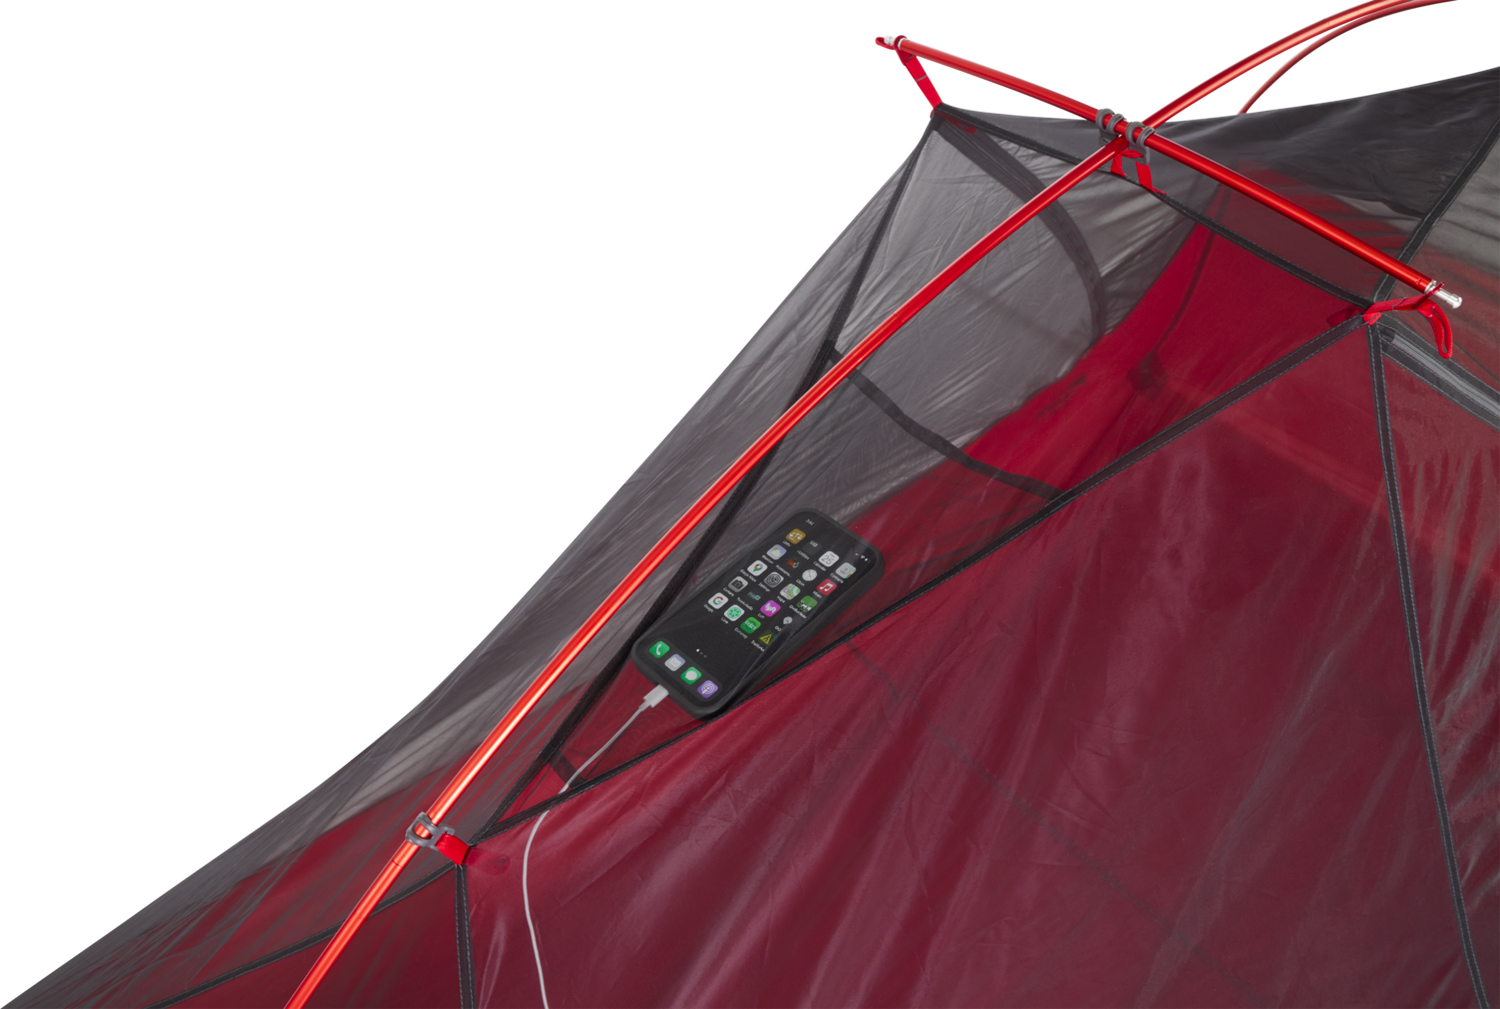 MSR FreeLite 2Tan Tent V3